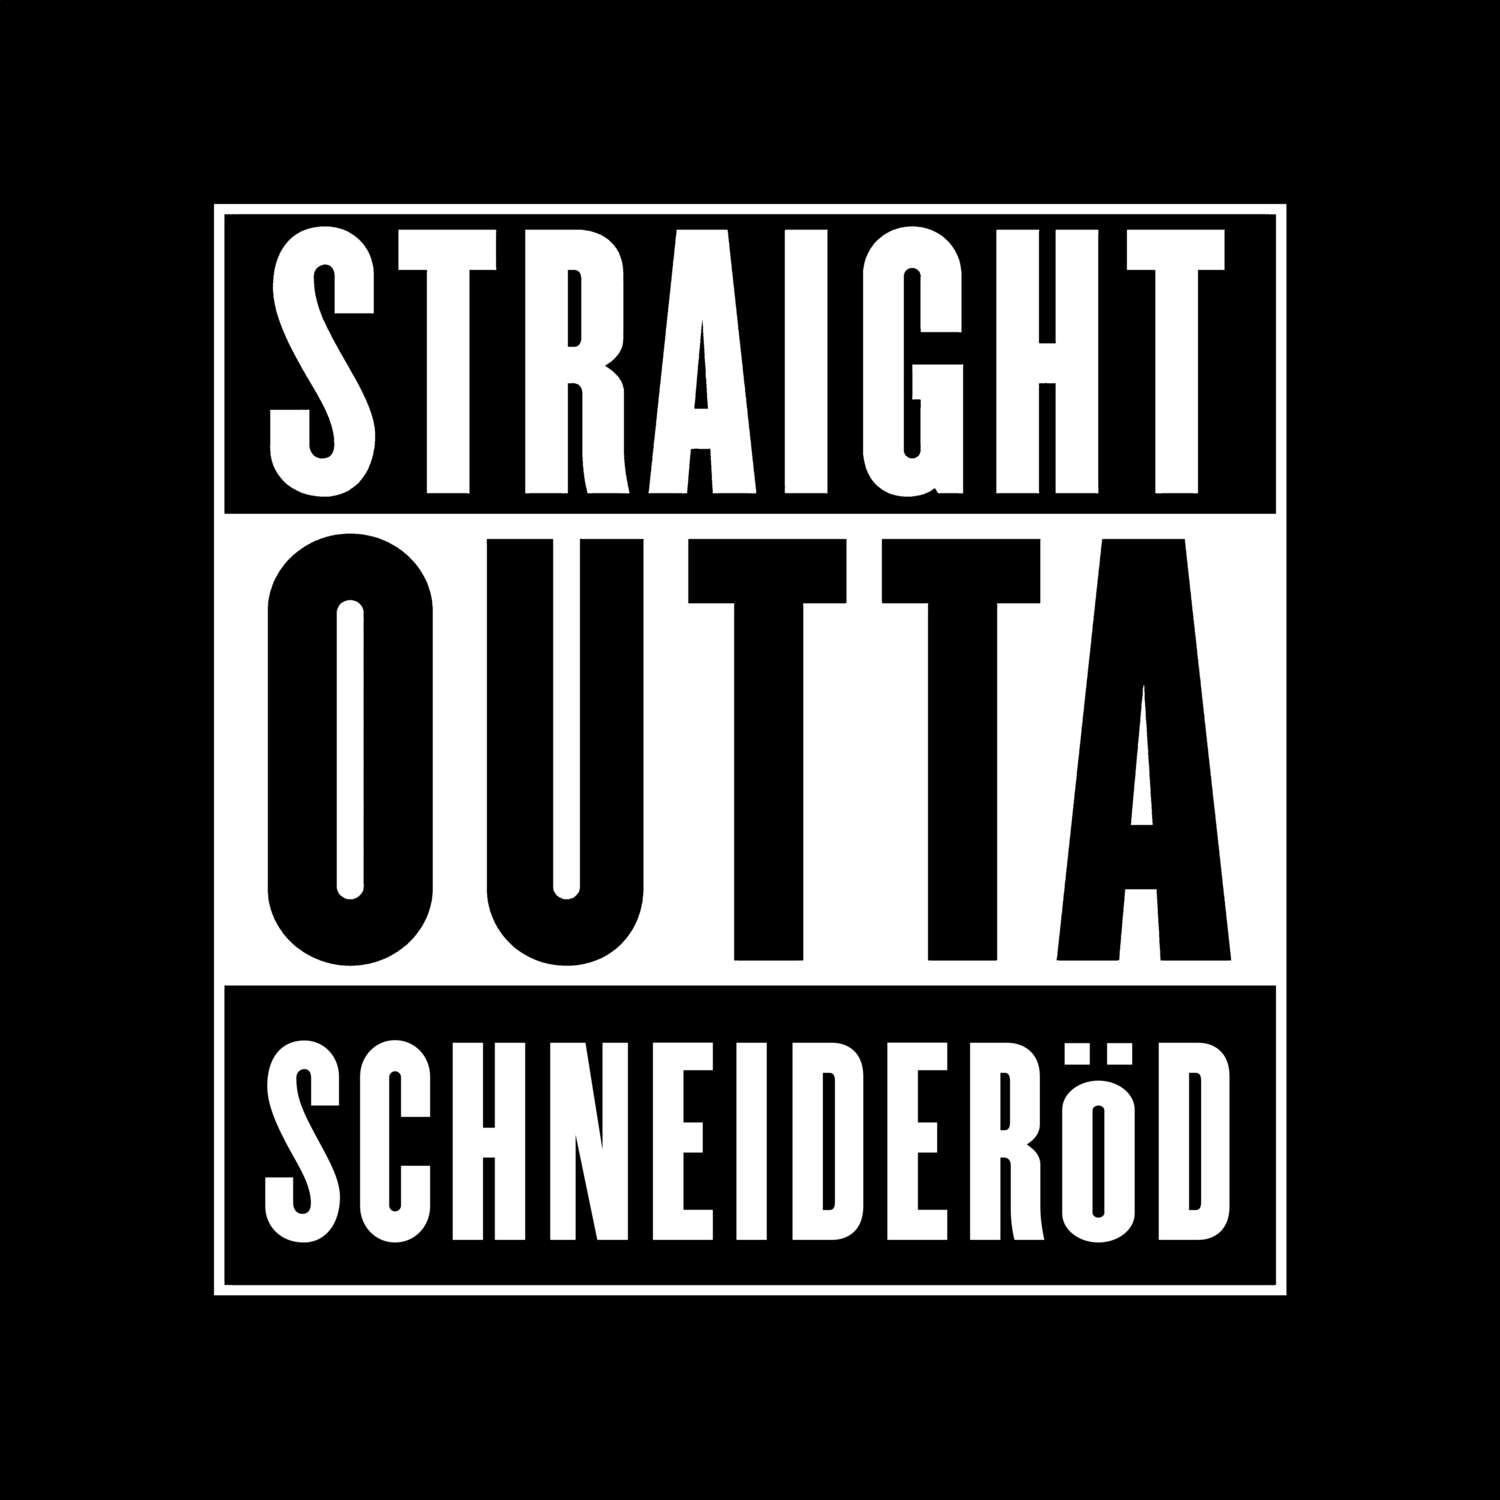 Schneideröd T-Shirt »Straight Outta«